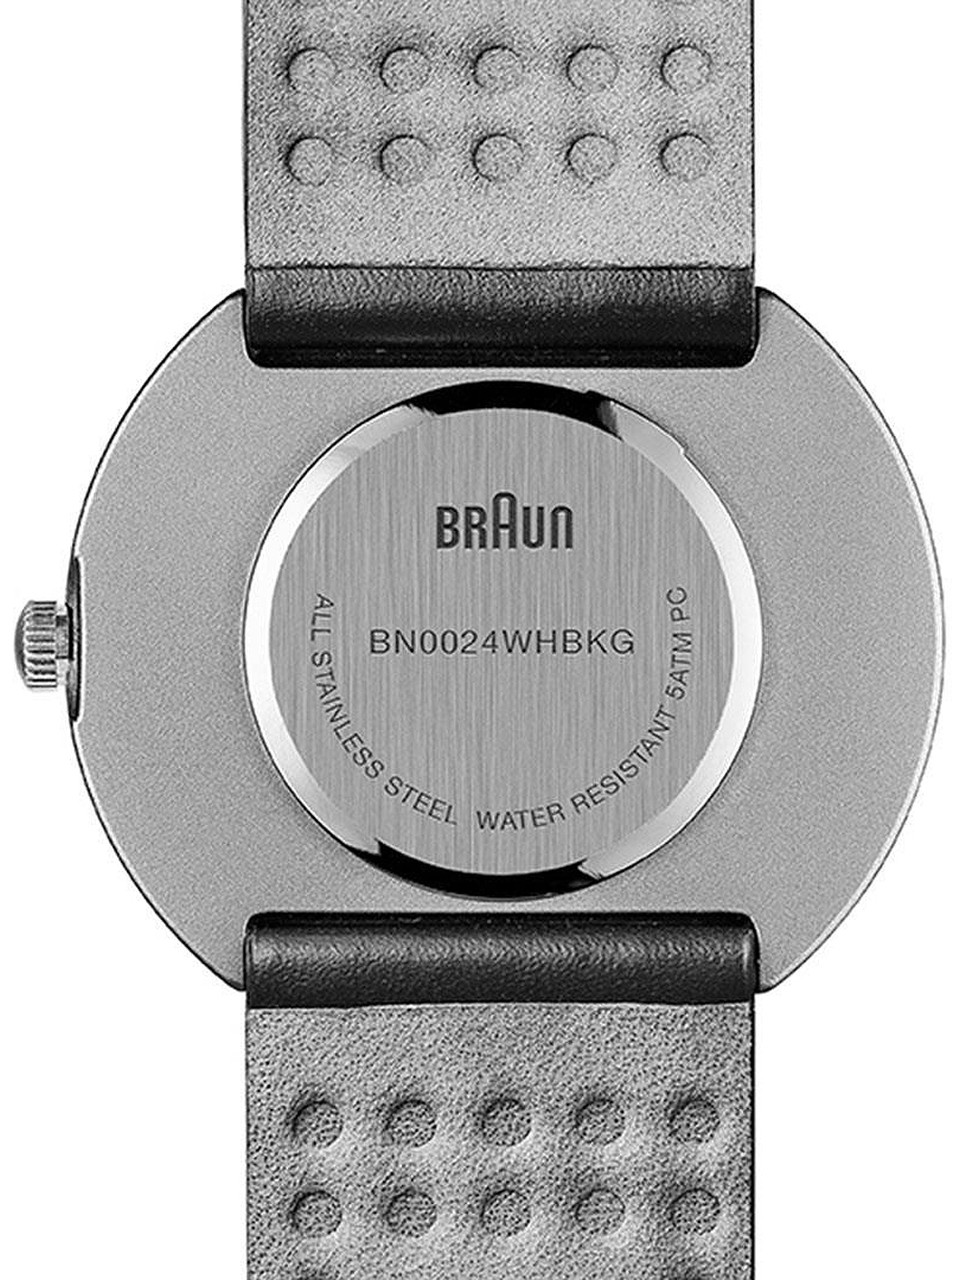 Braun Men's BN0024WHBKG Analog Wrist Watch Black Leather Band